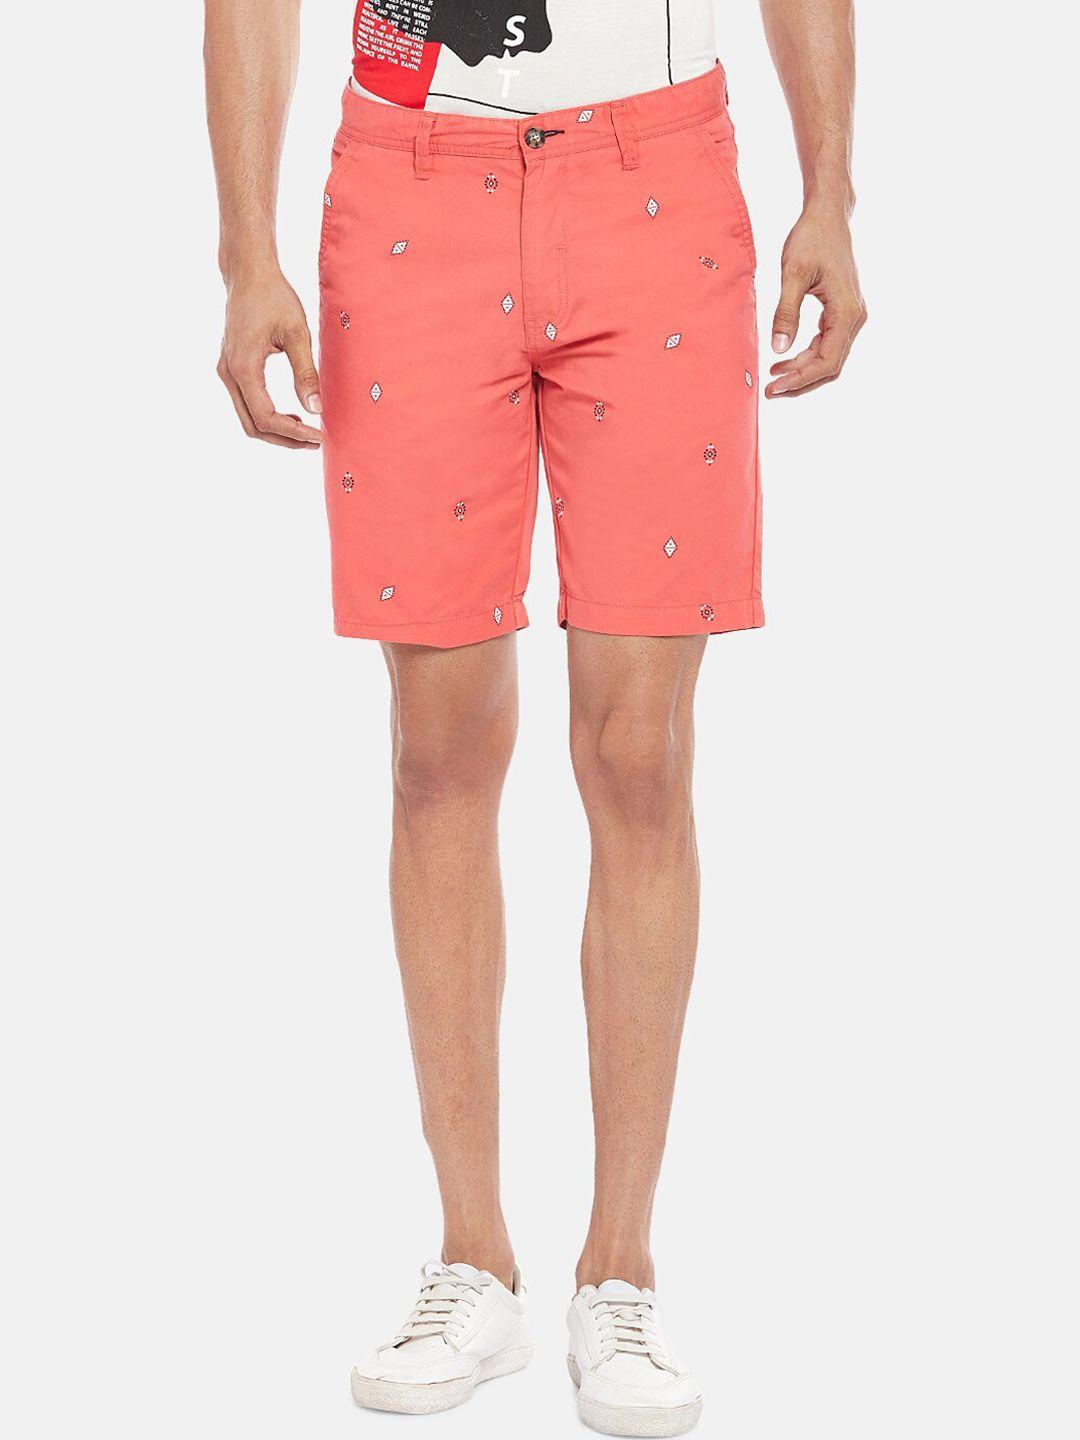 urban ranger by pantaloons men coral pink pure cotton printed slim fit regular shorts